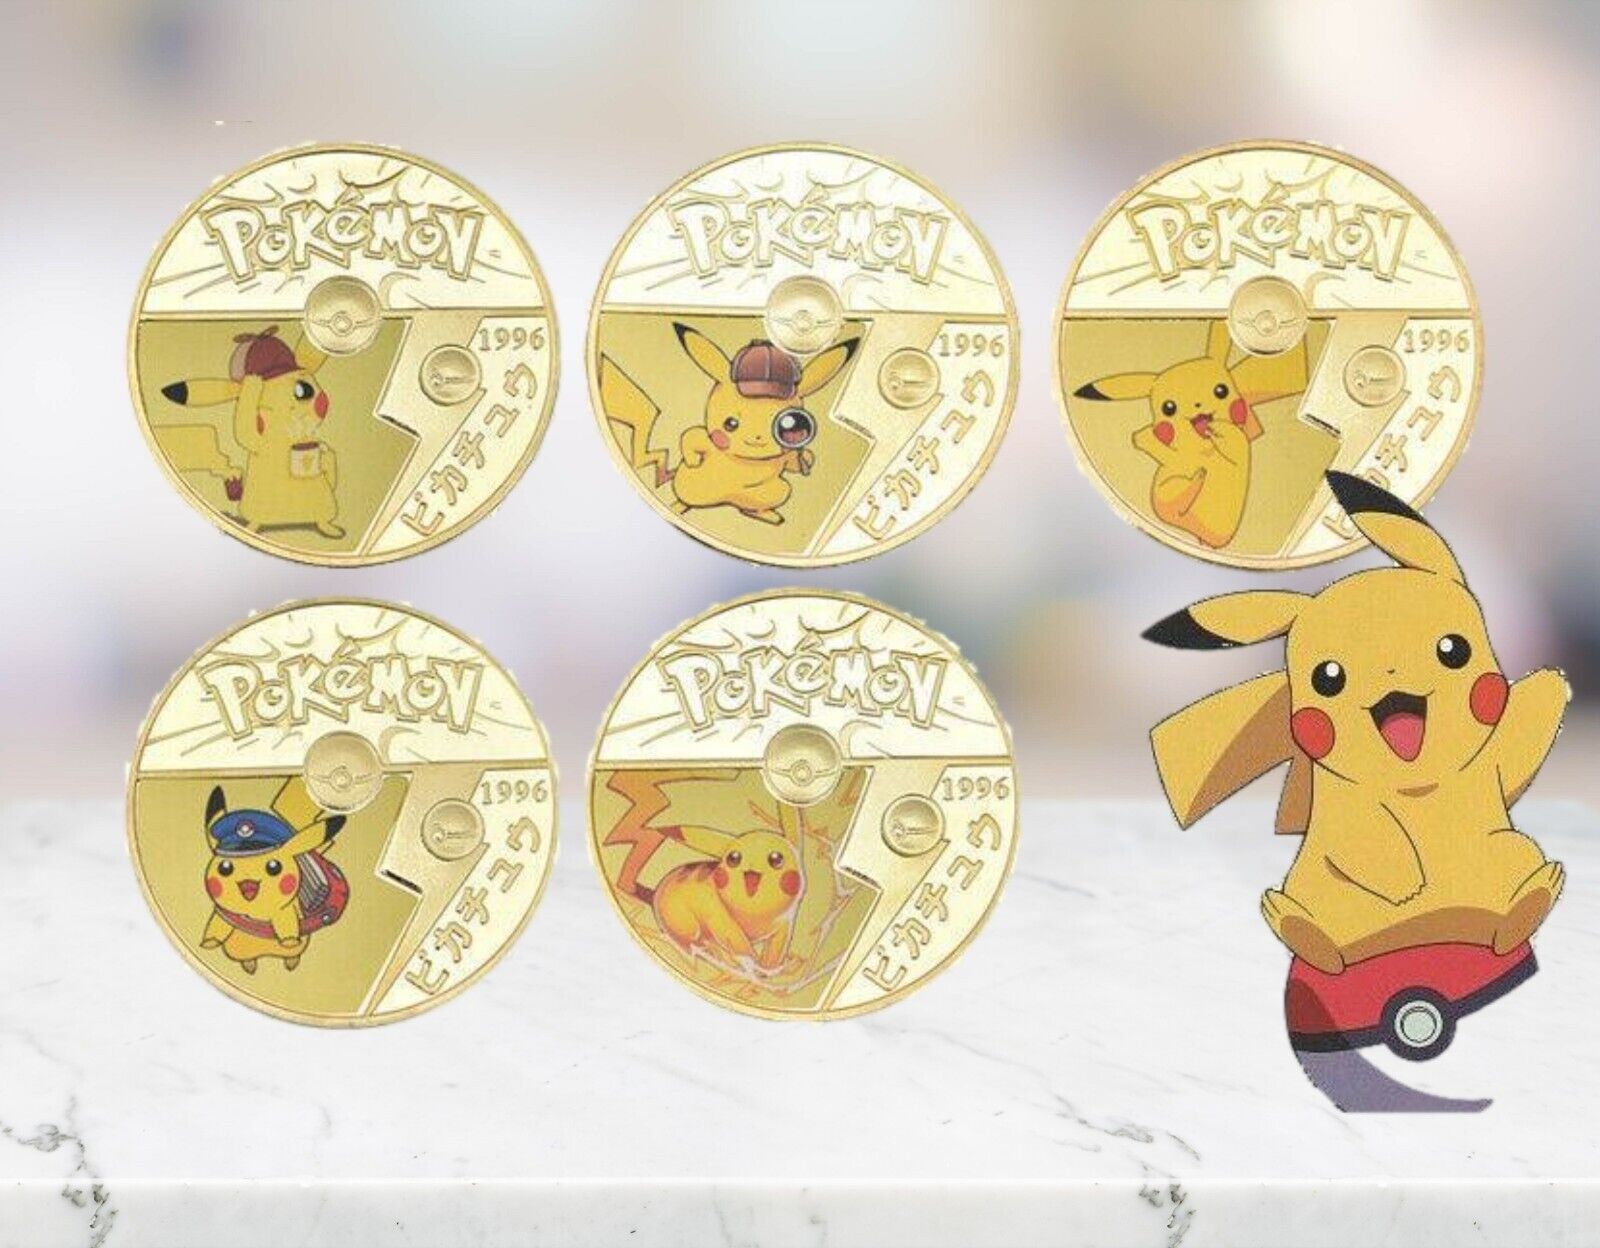 5 PCS Pokemon Pikachu Coin Japan Anime Gold Commemorative Coin Collectibles Japa